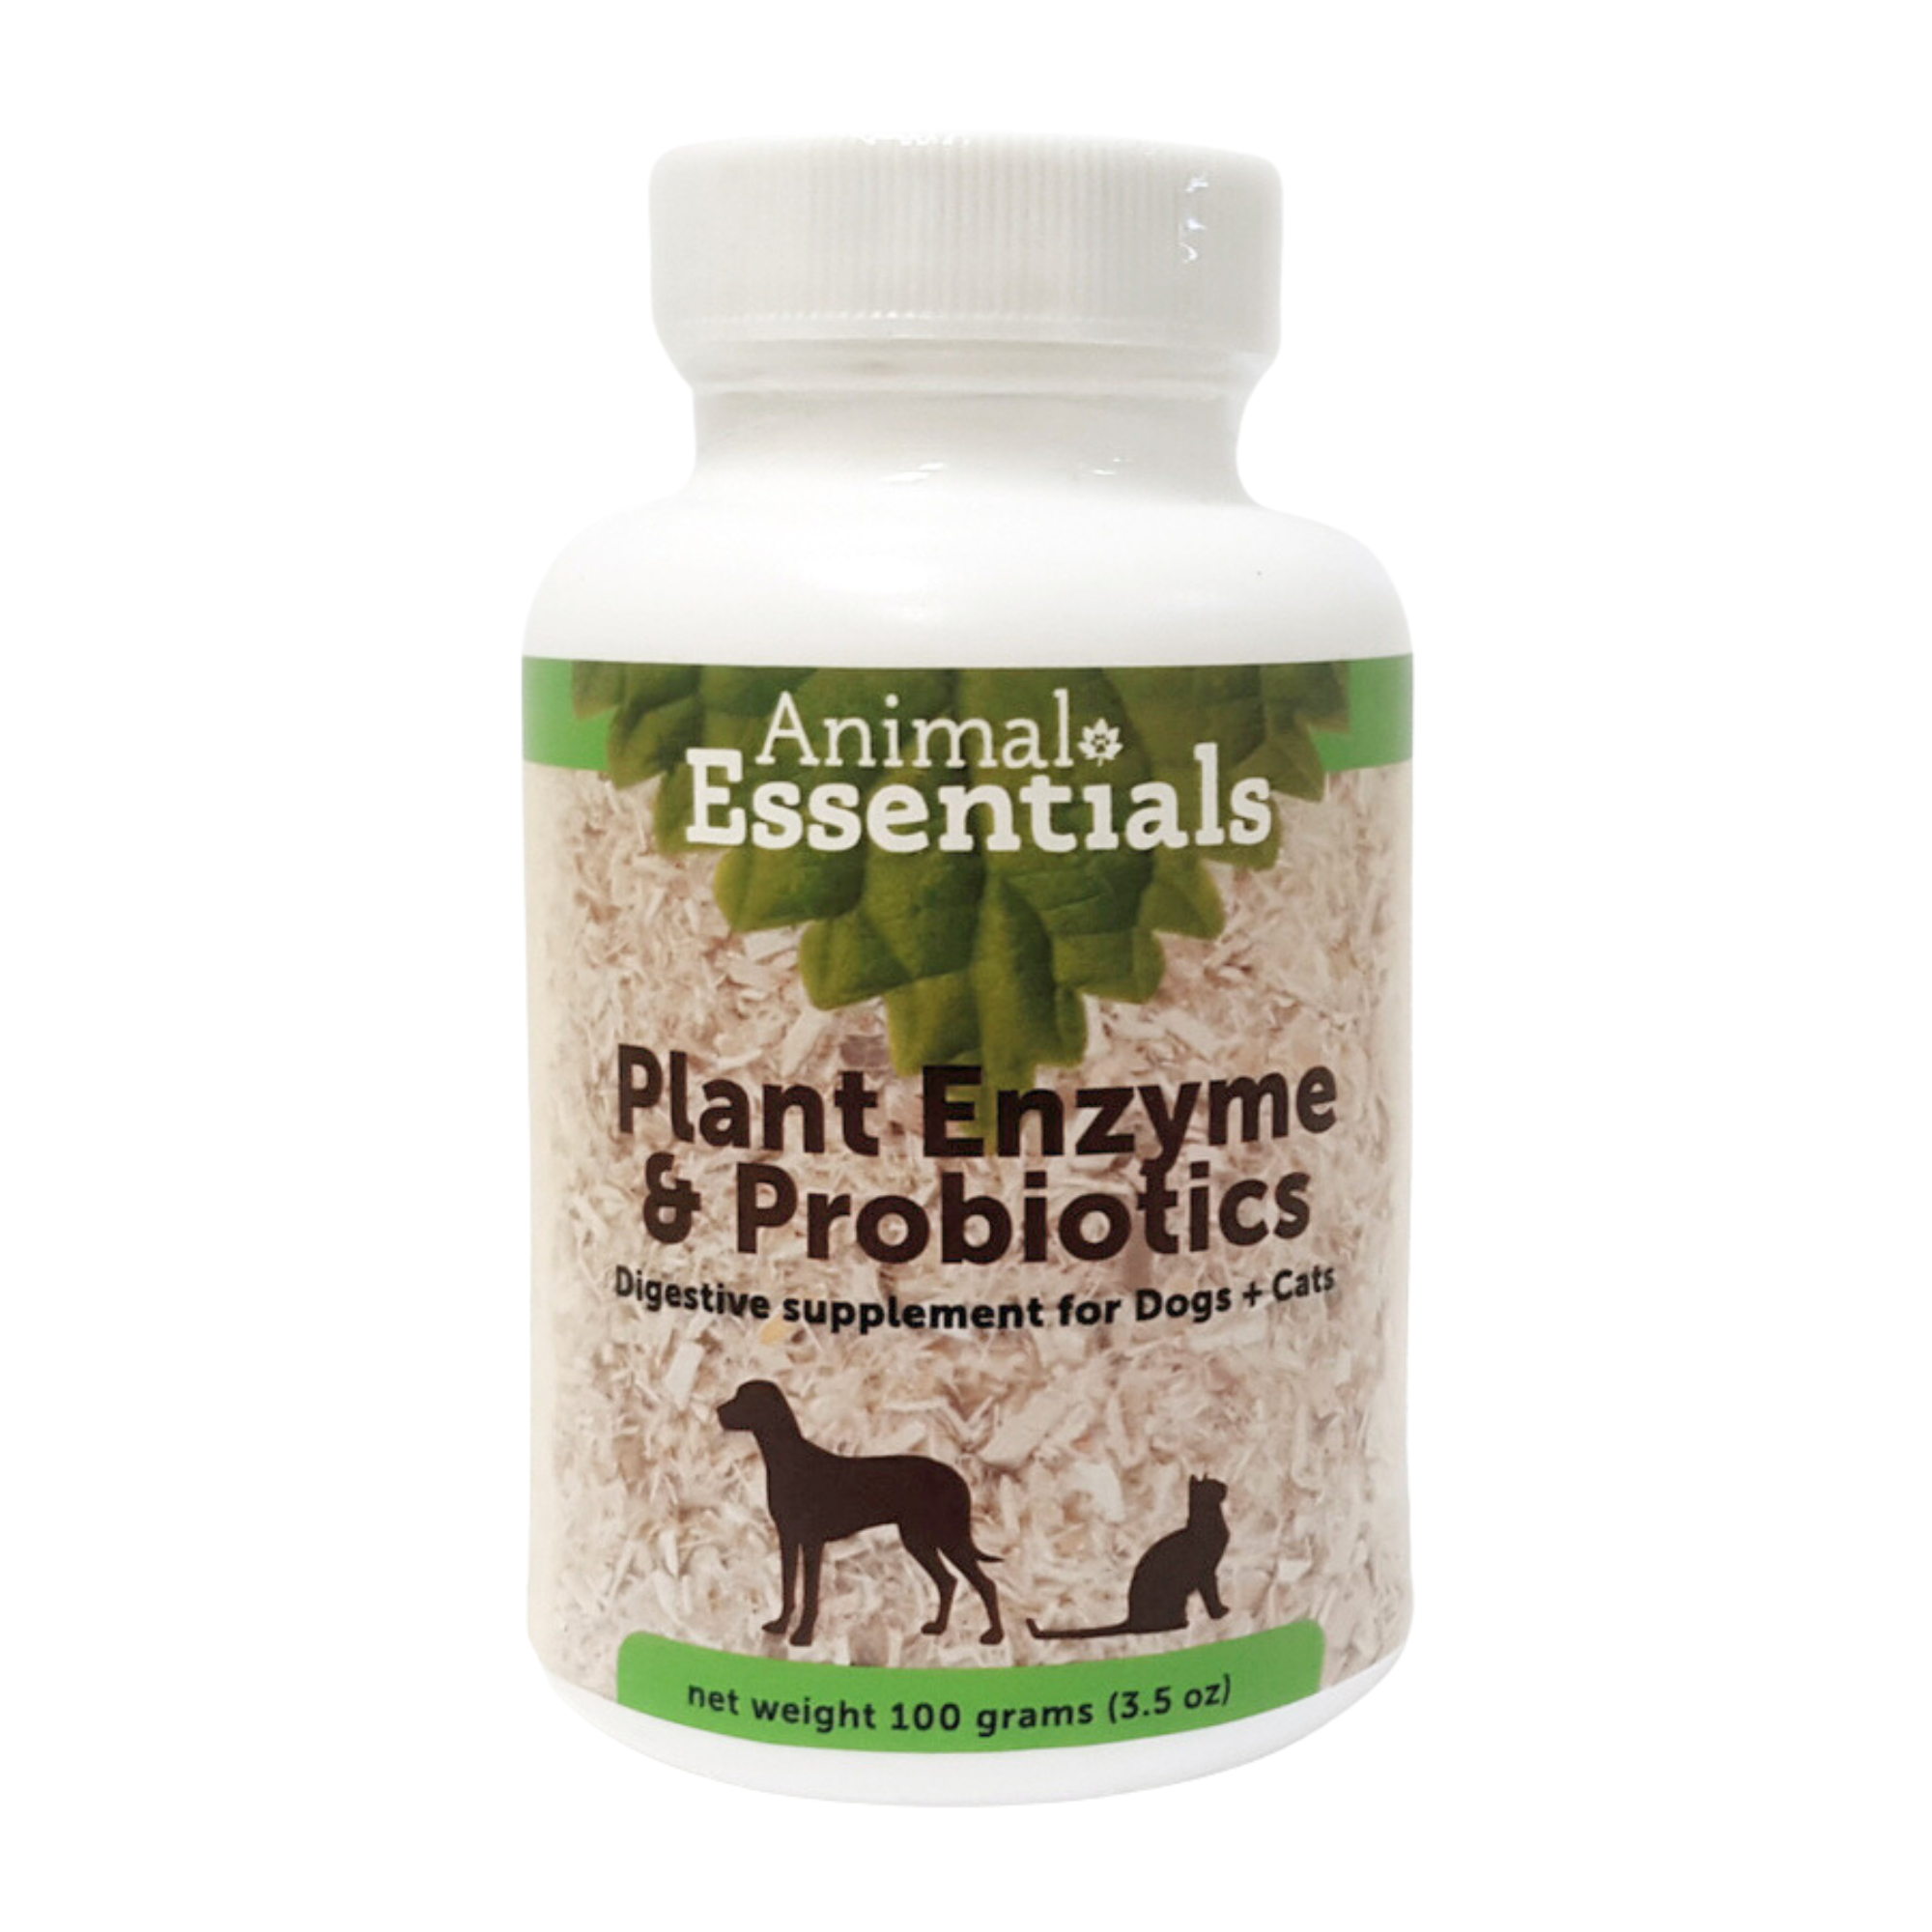 Animal Essentials Animal Essentials Plant Enzymes & Probiotics